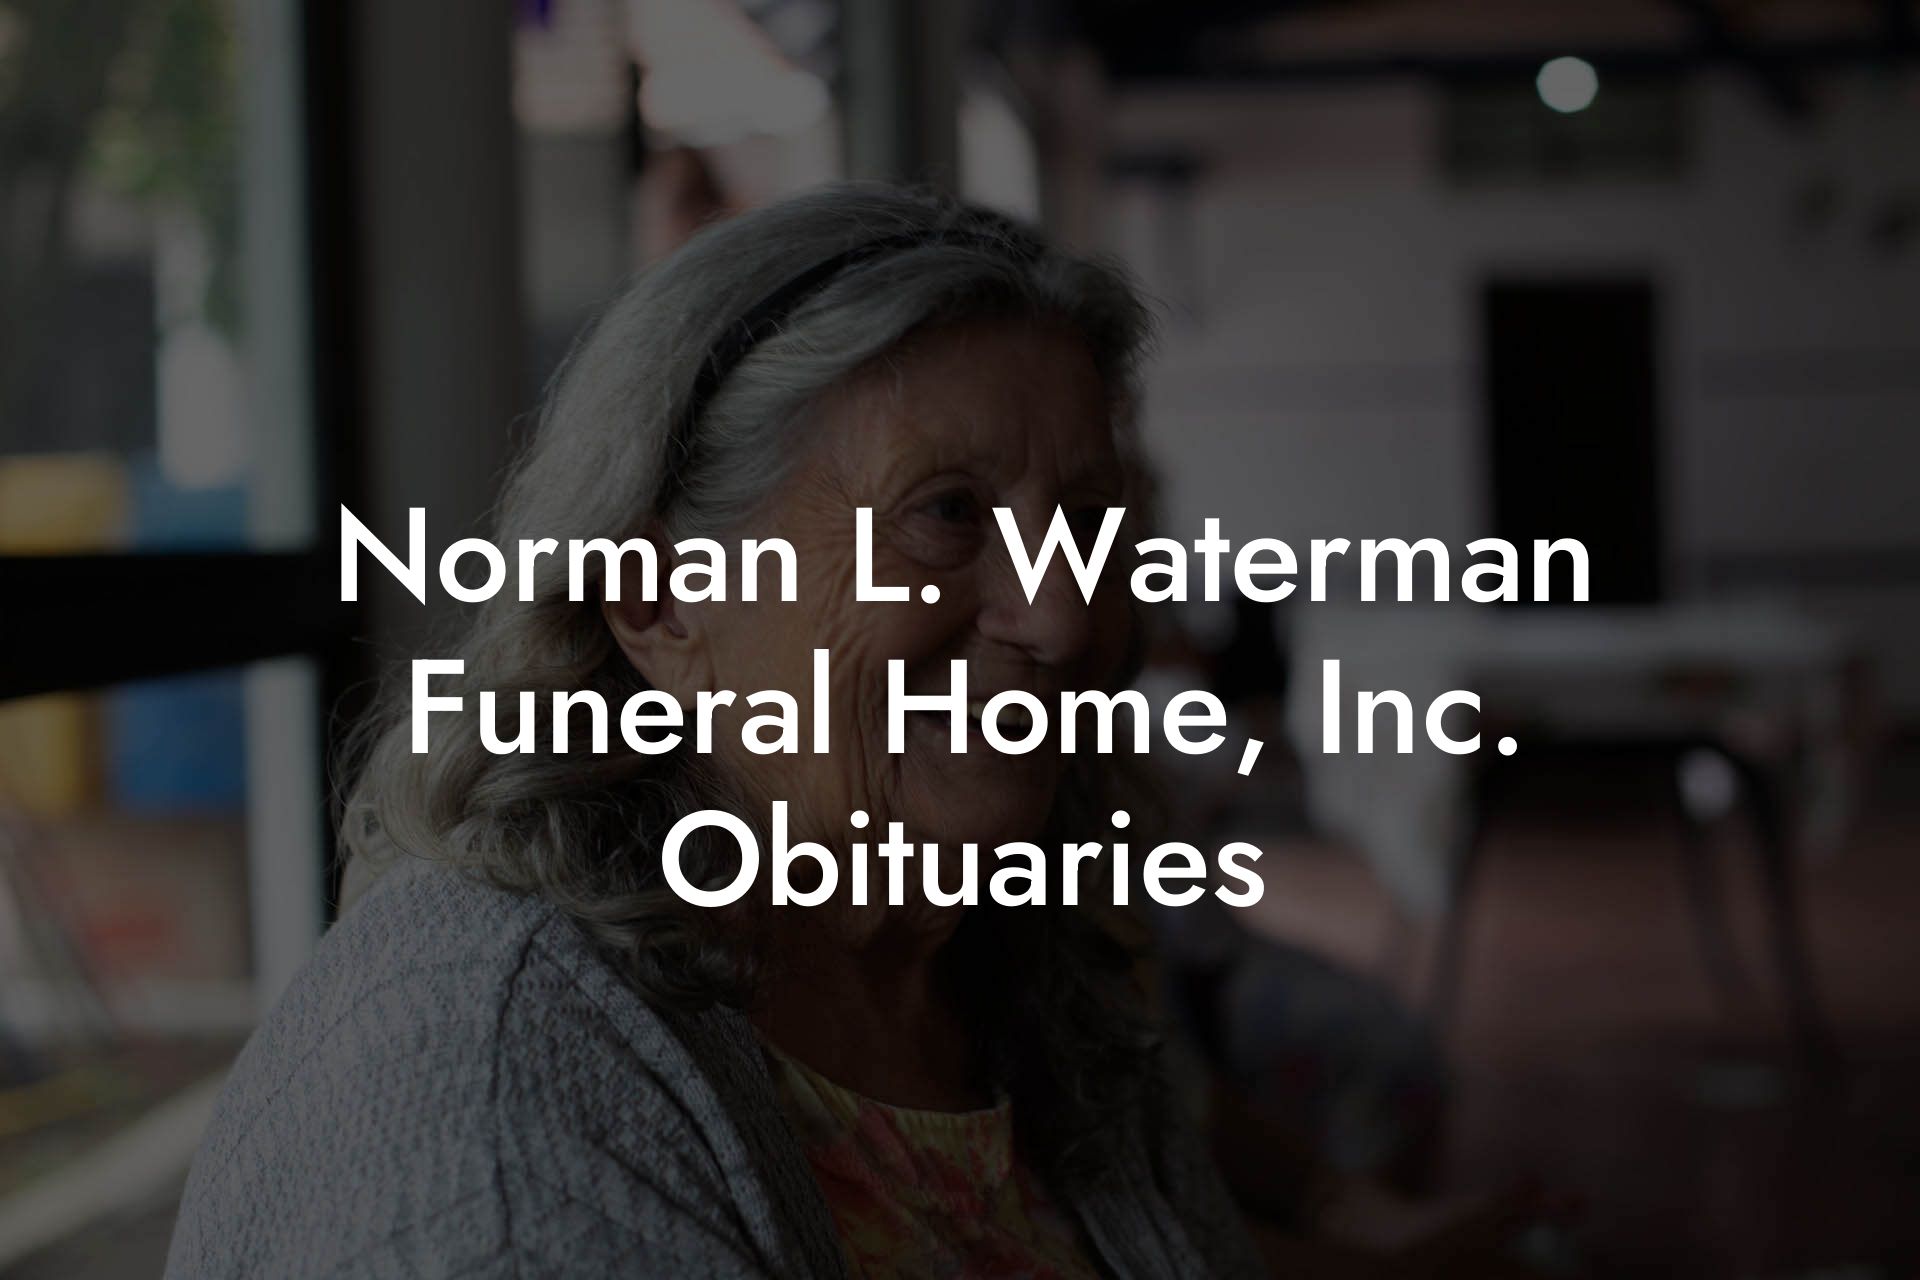 Norman L. Waterman Funeral Home, Inc. Obituaries